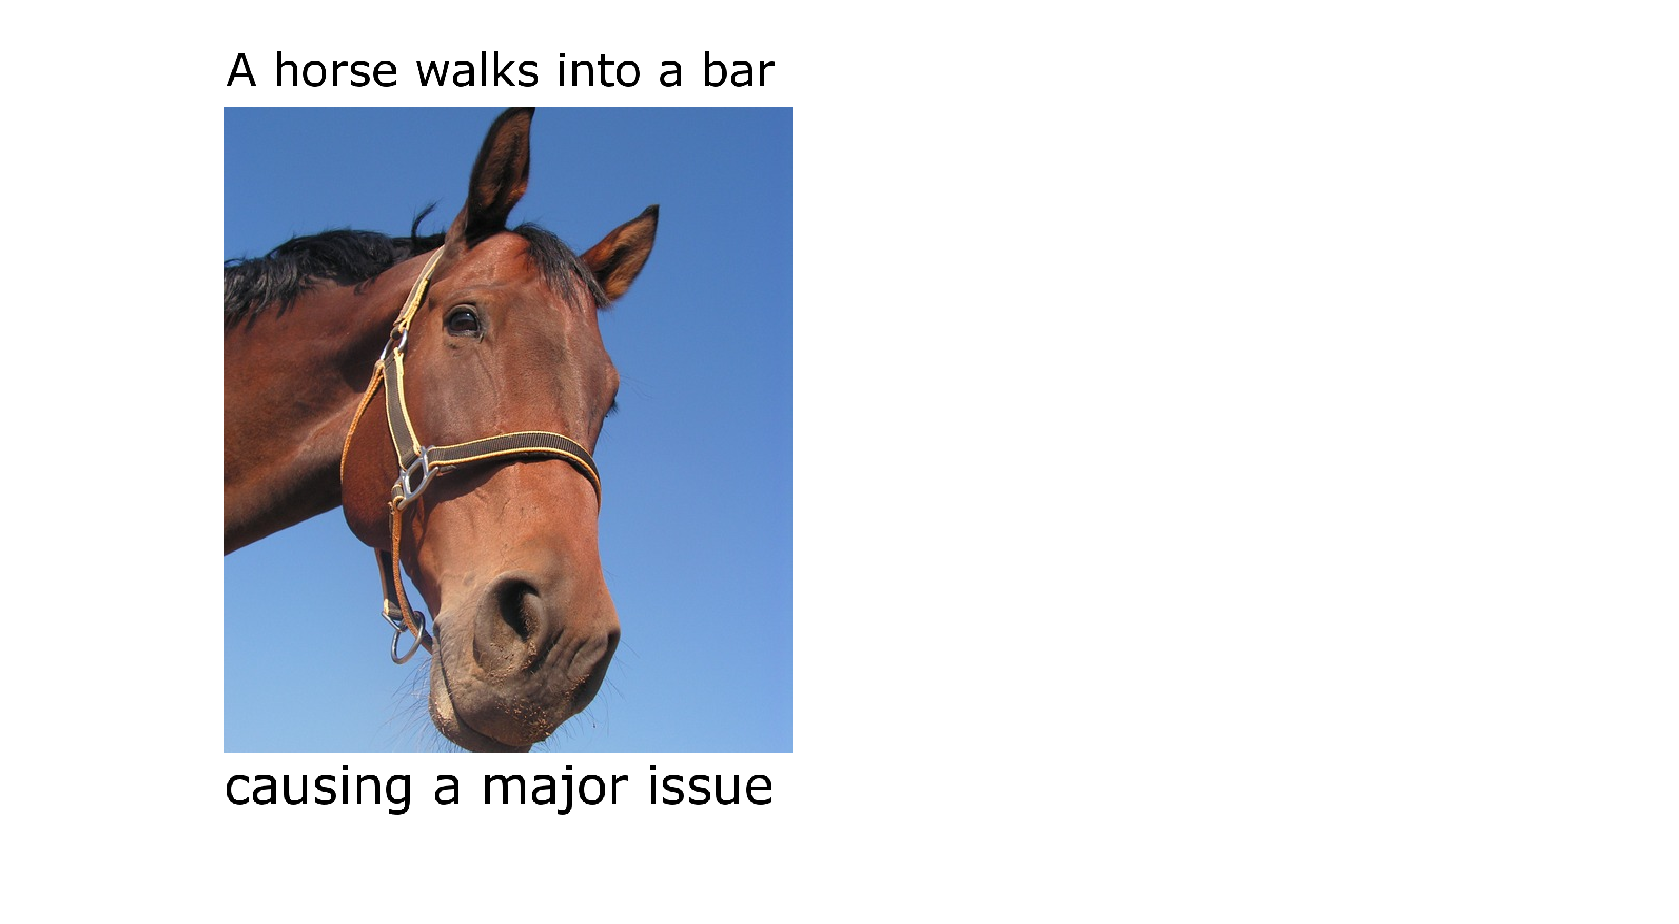 Horse walks into bar